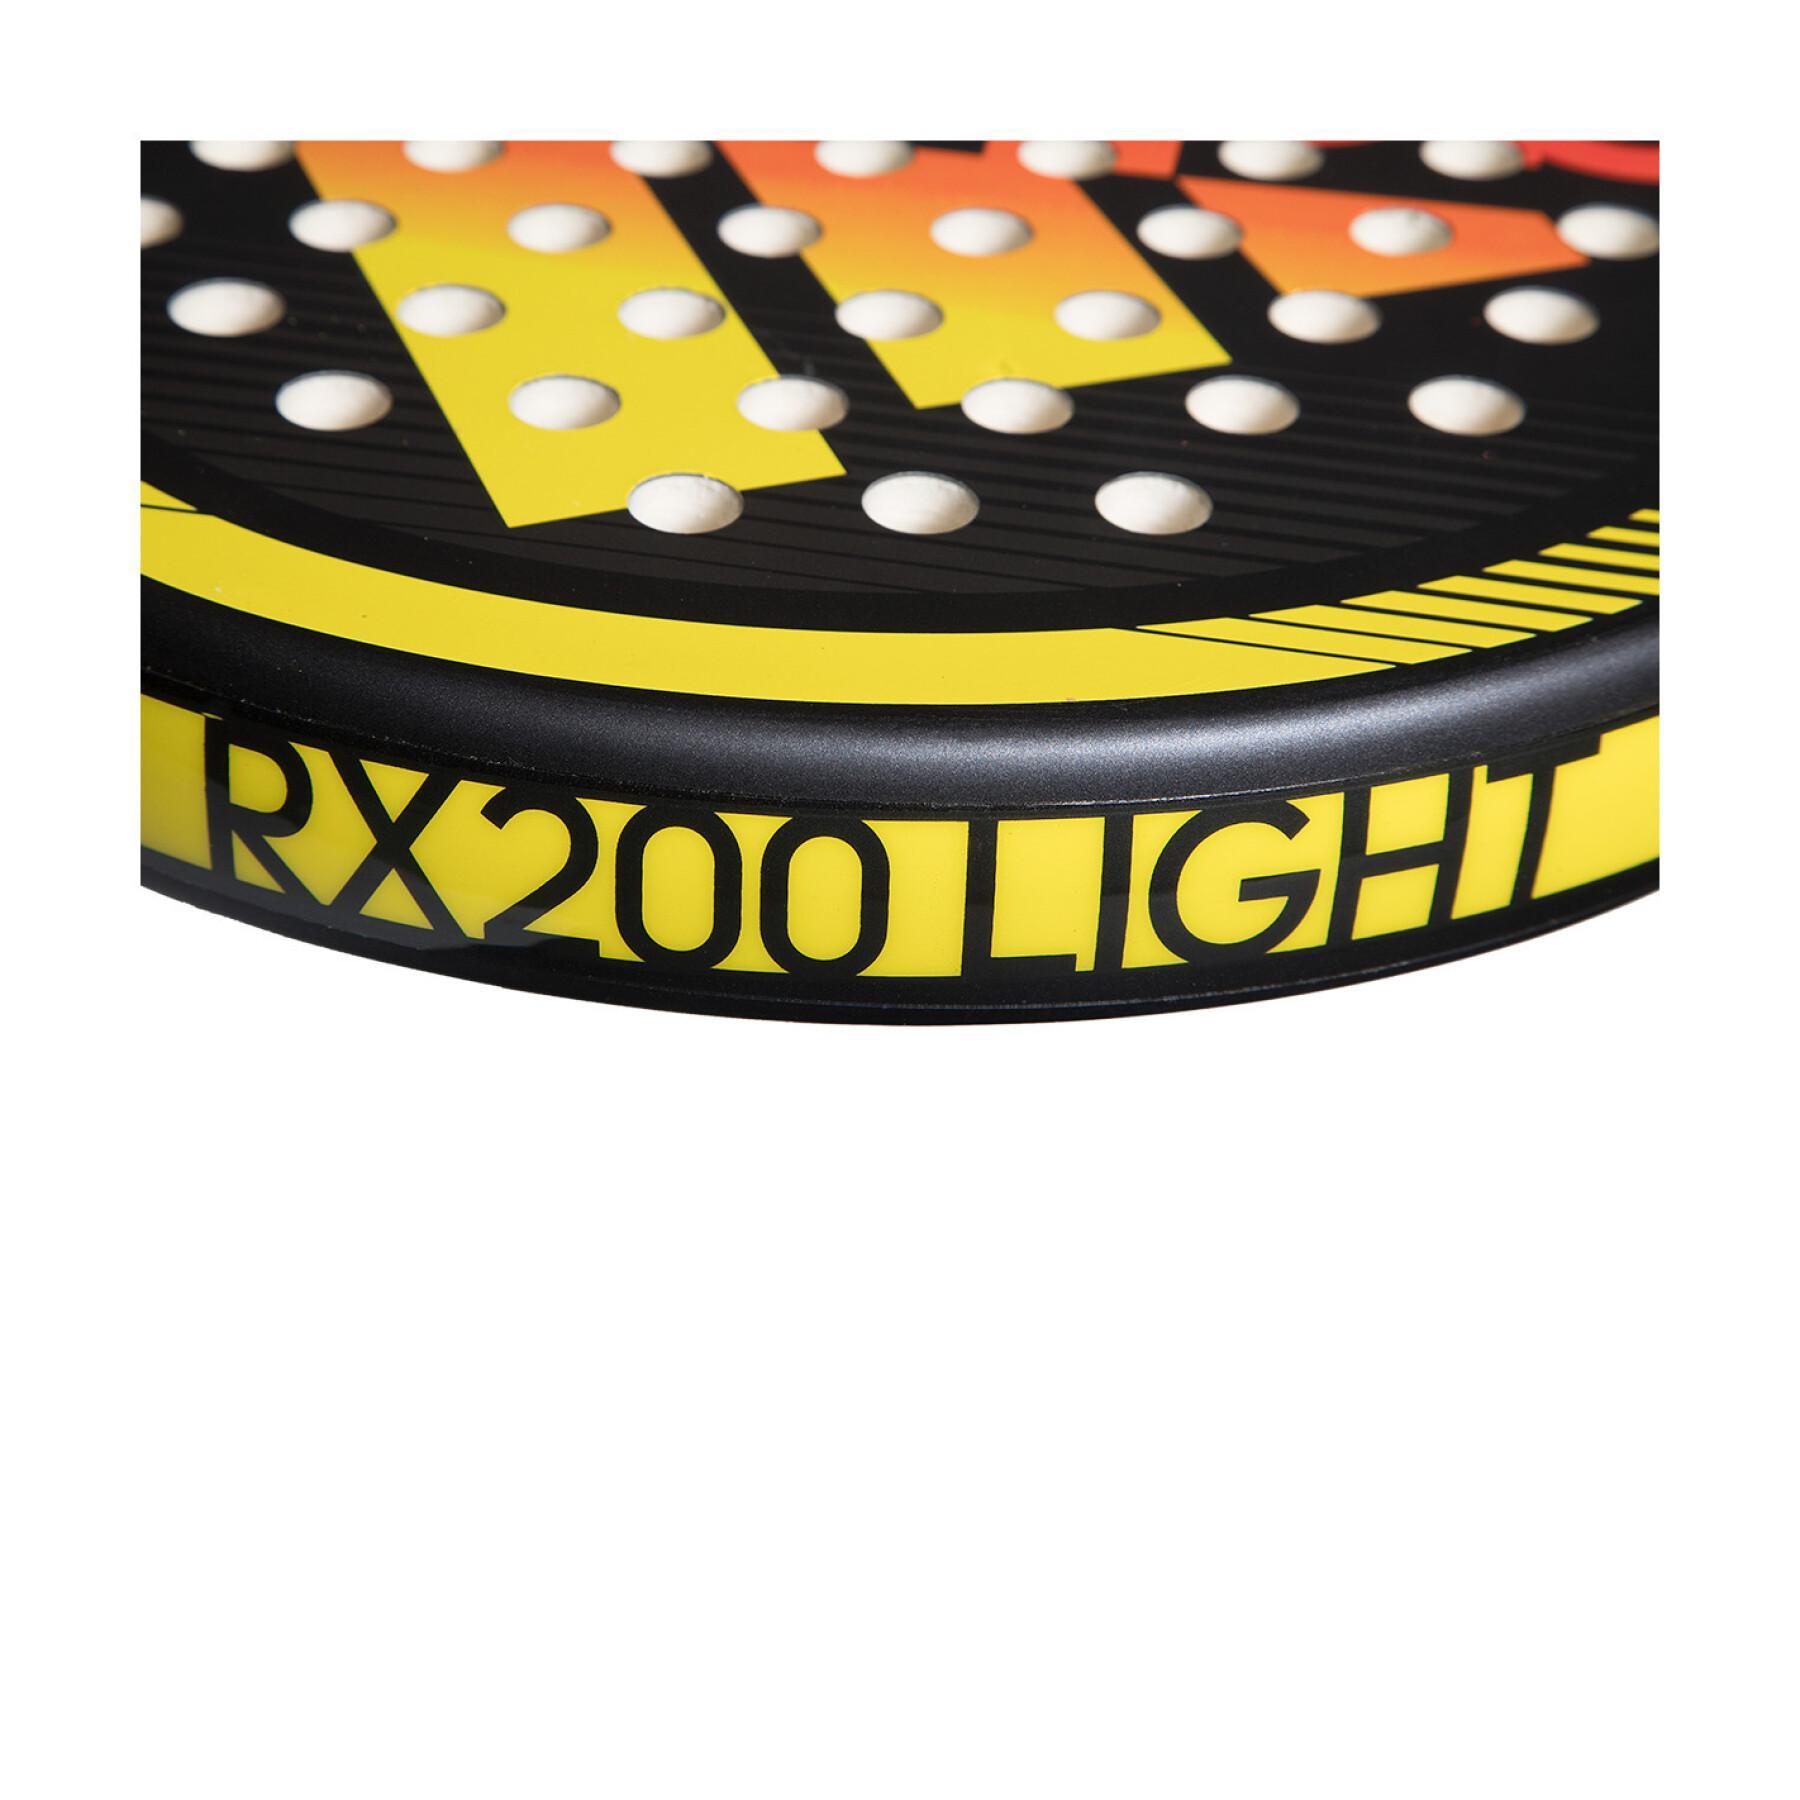 Paddelracket adidas RX 200 Light